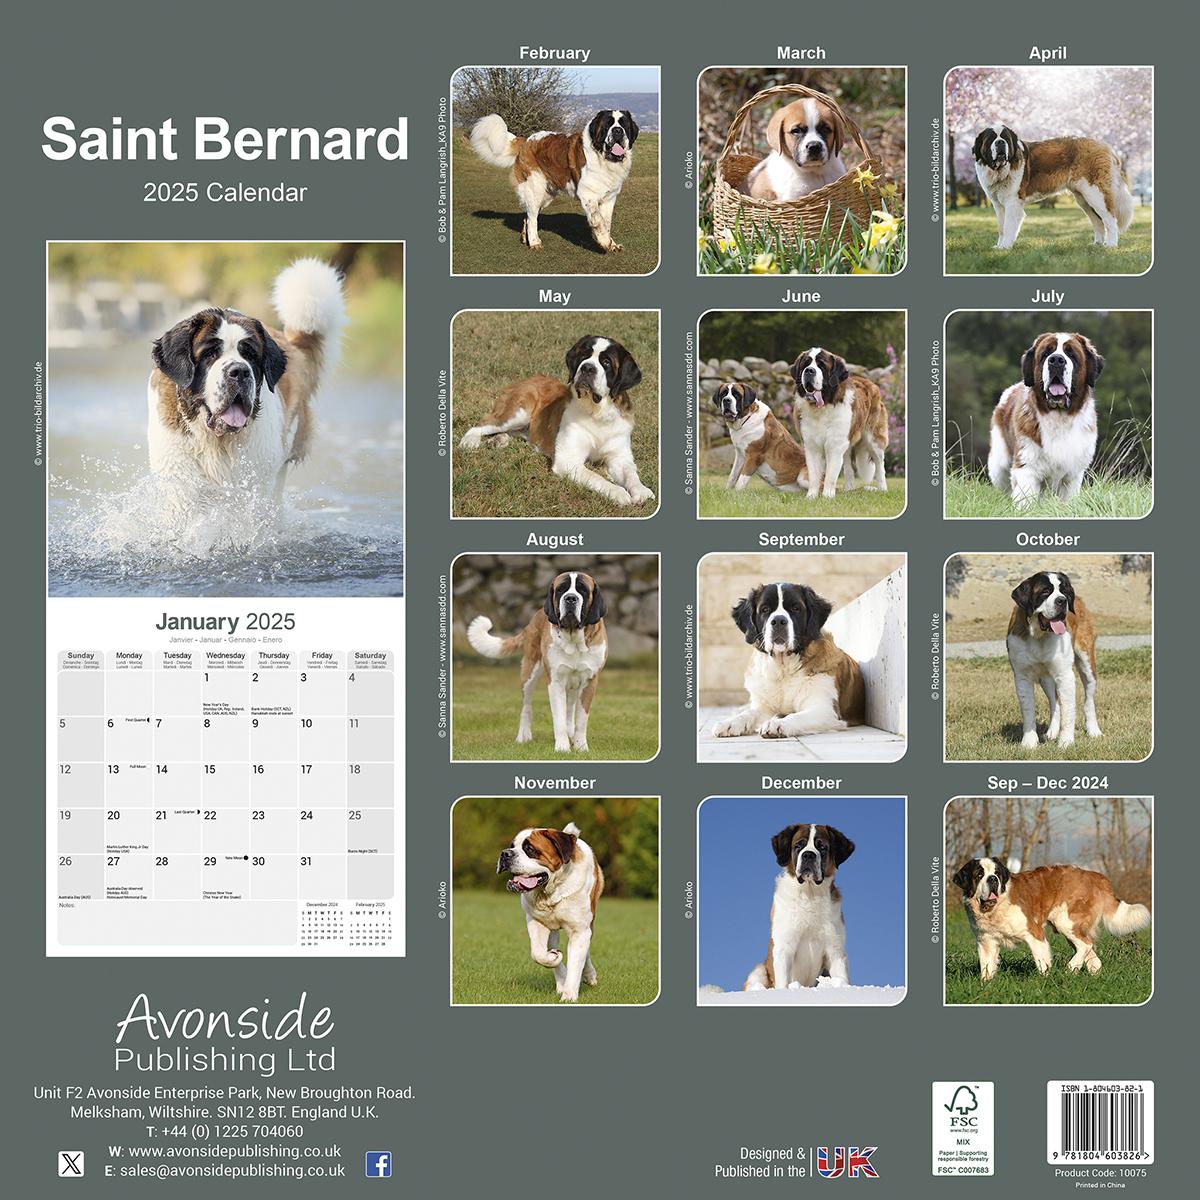 Saint Bernard 2025 Calendar Avonside